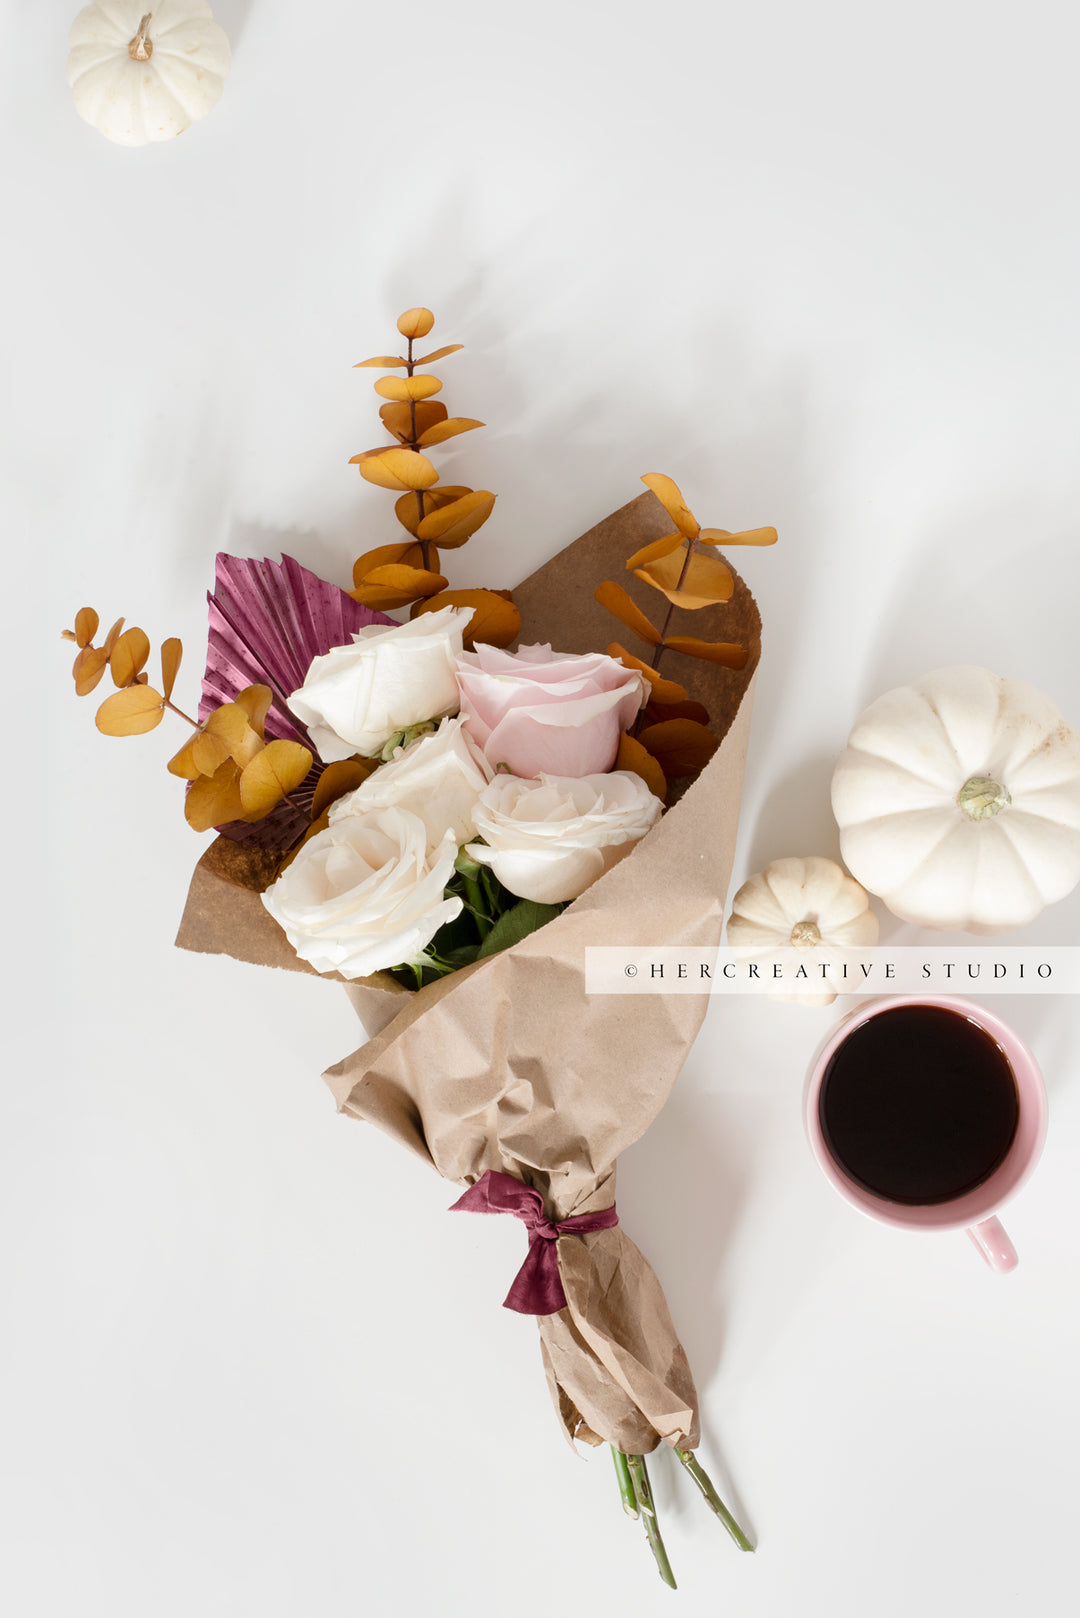 Pumpkins, Coffee & Bouquet of Fall Flowers. Digital Stock Image.